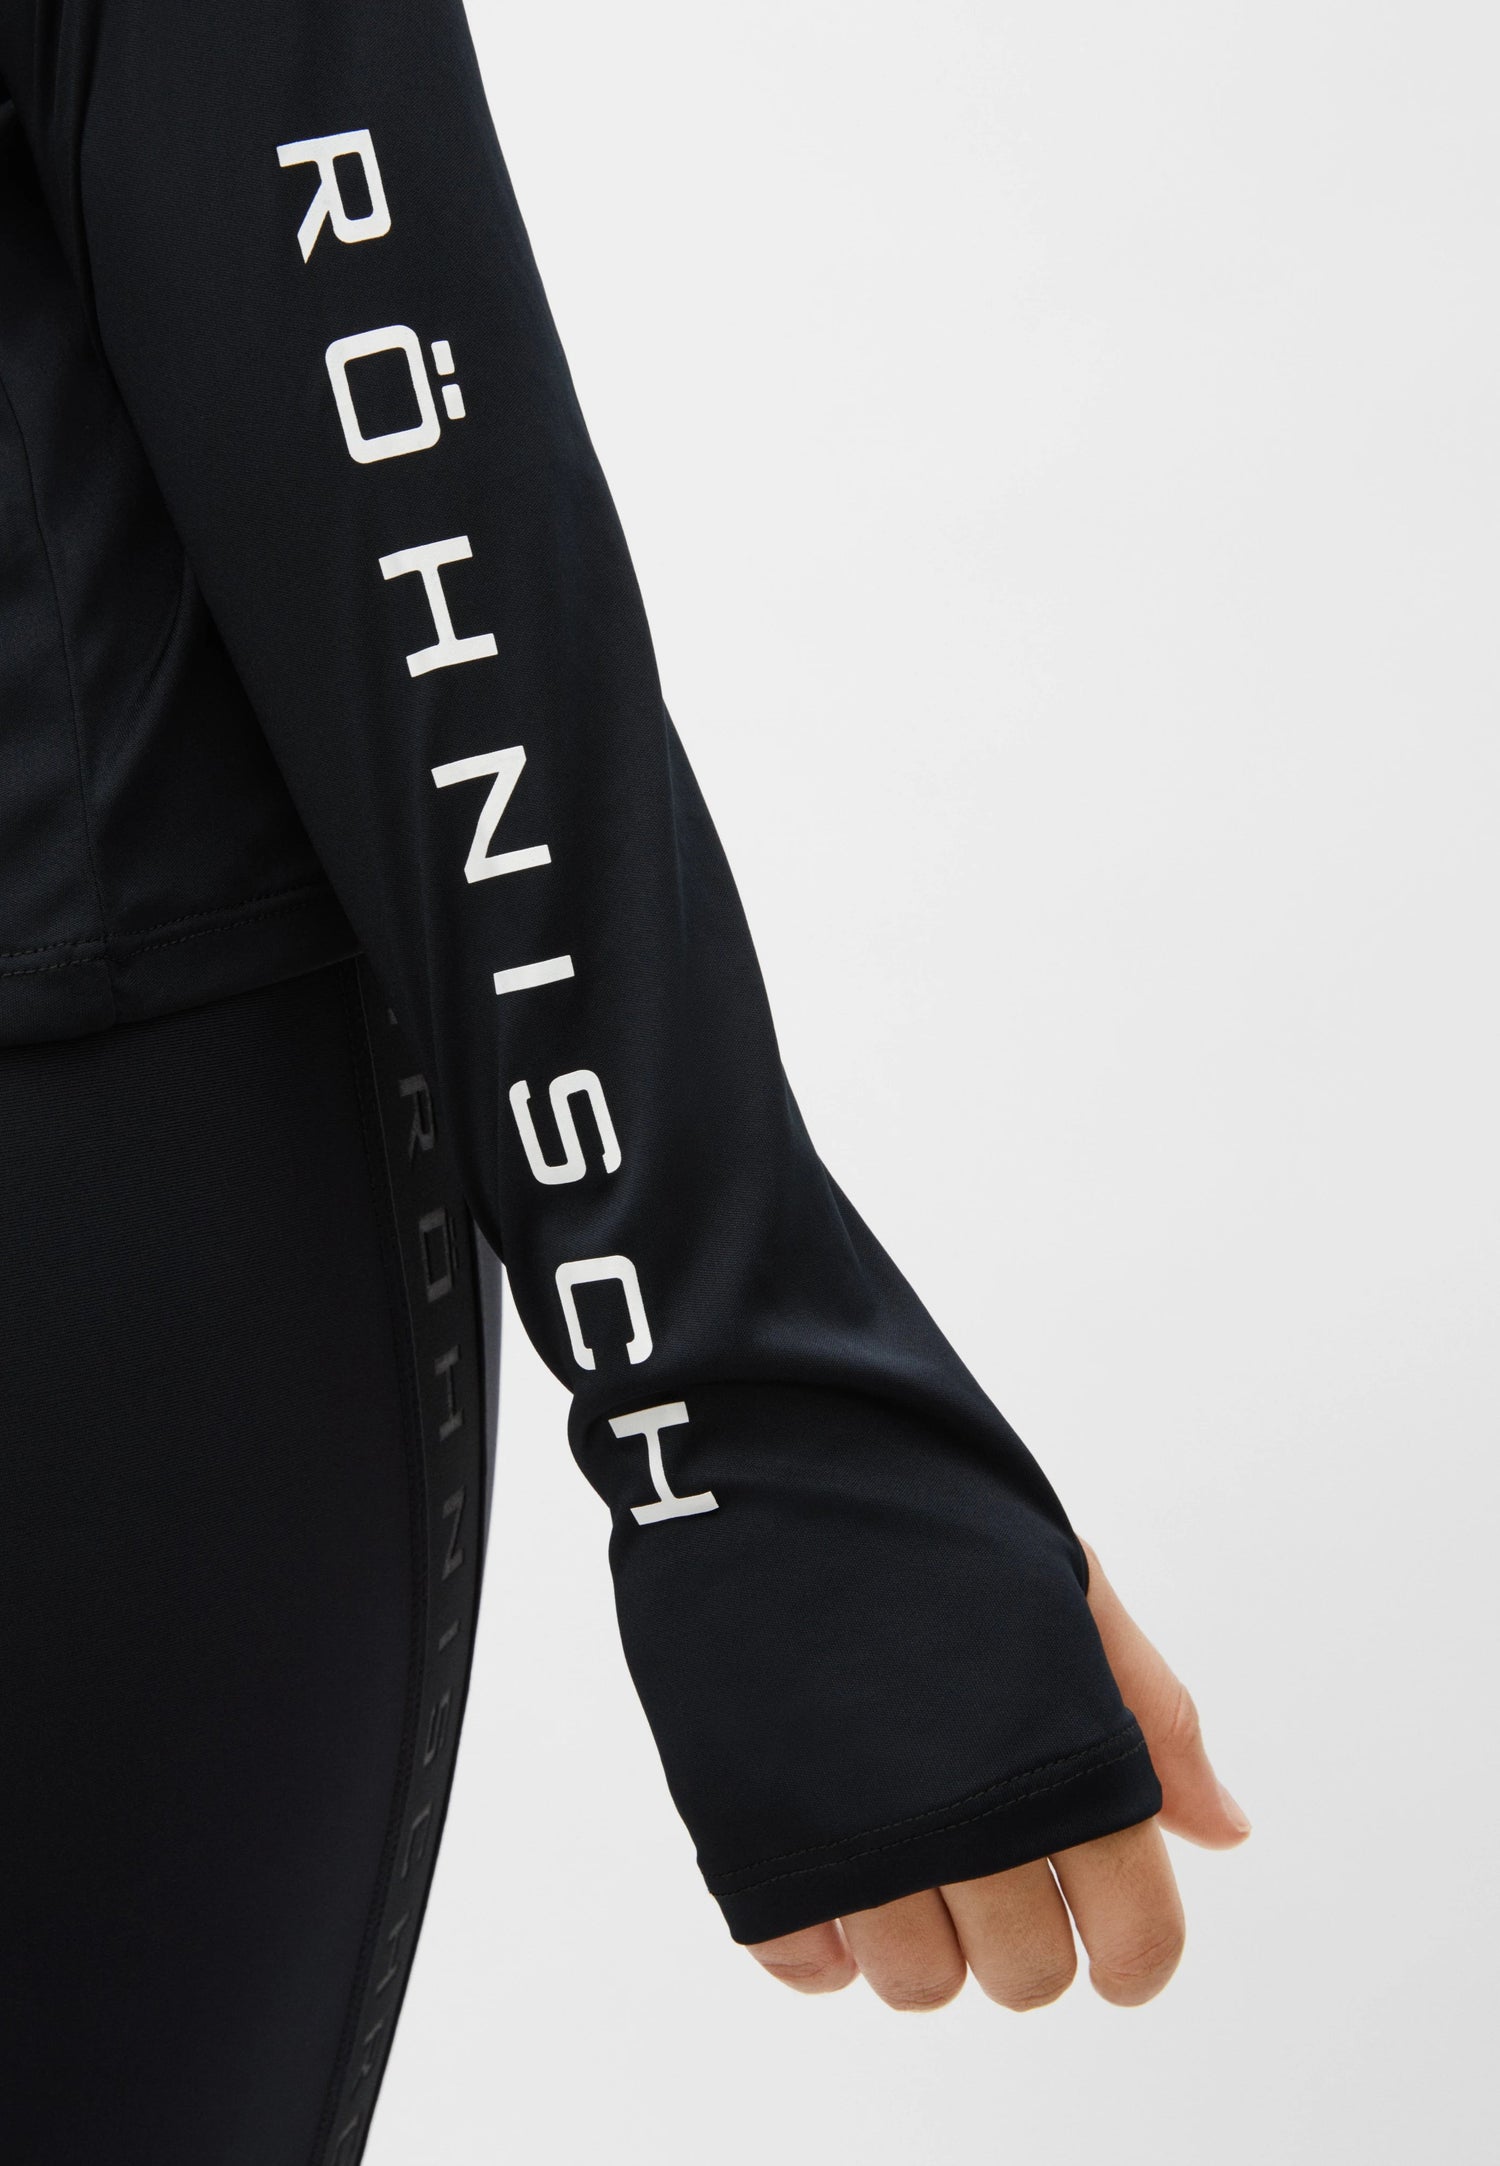 Röhnisch Team Logo Long Sleeve - 100% recycled polyester Black Shirt